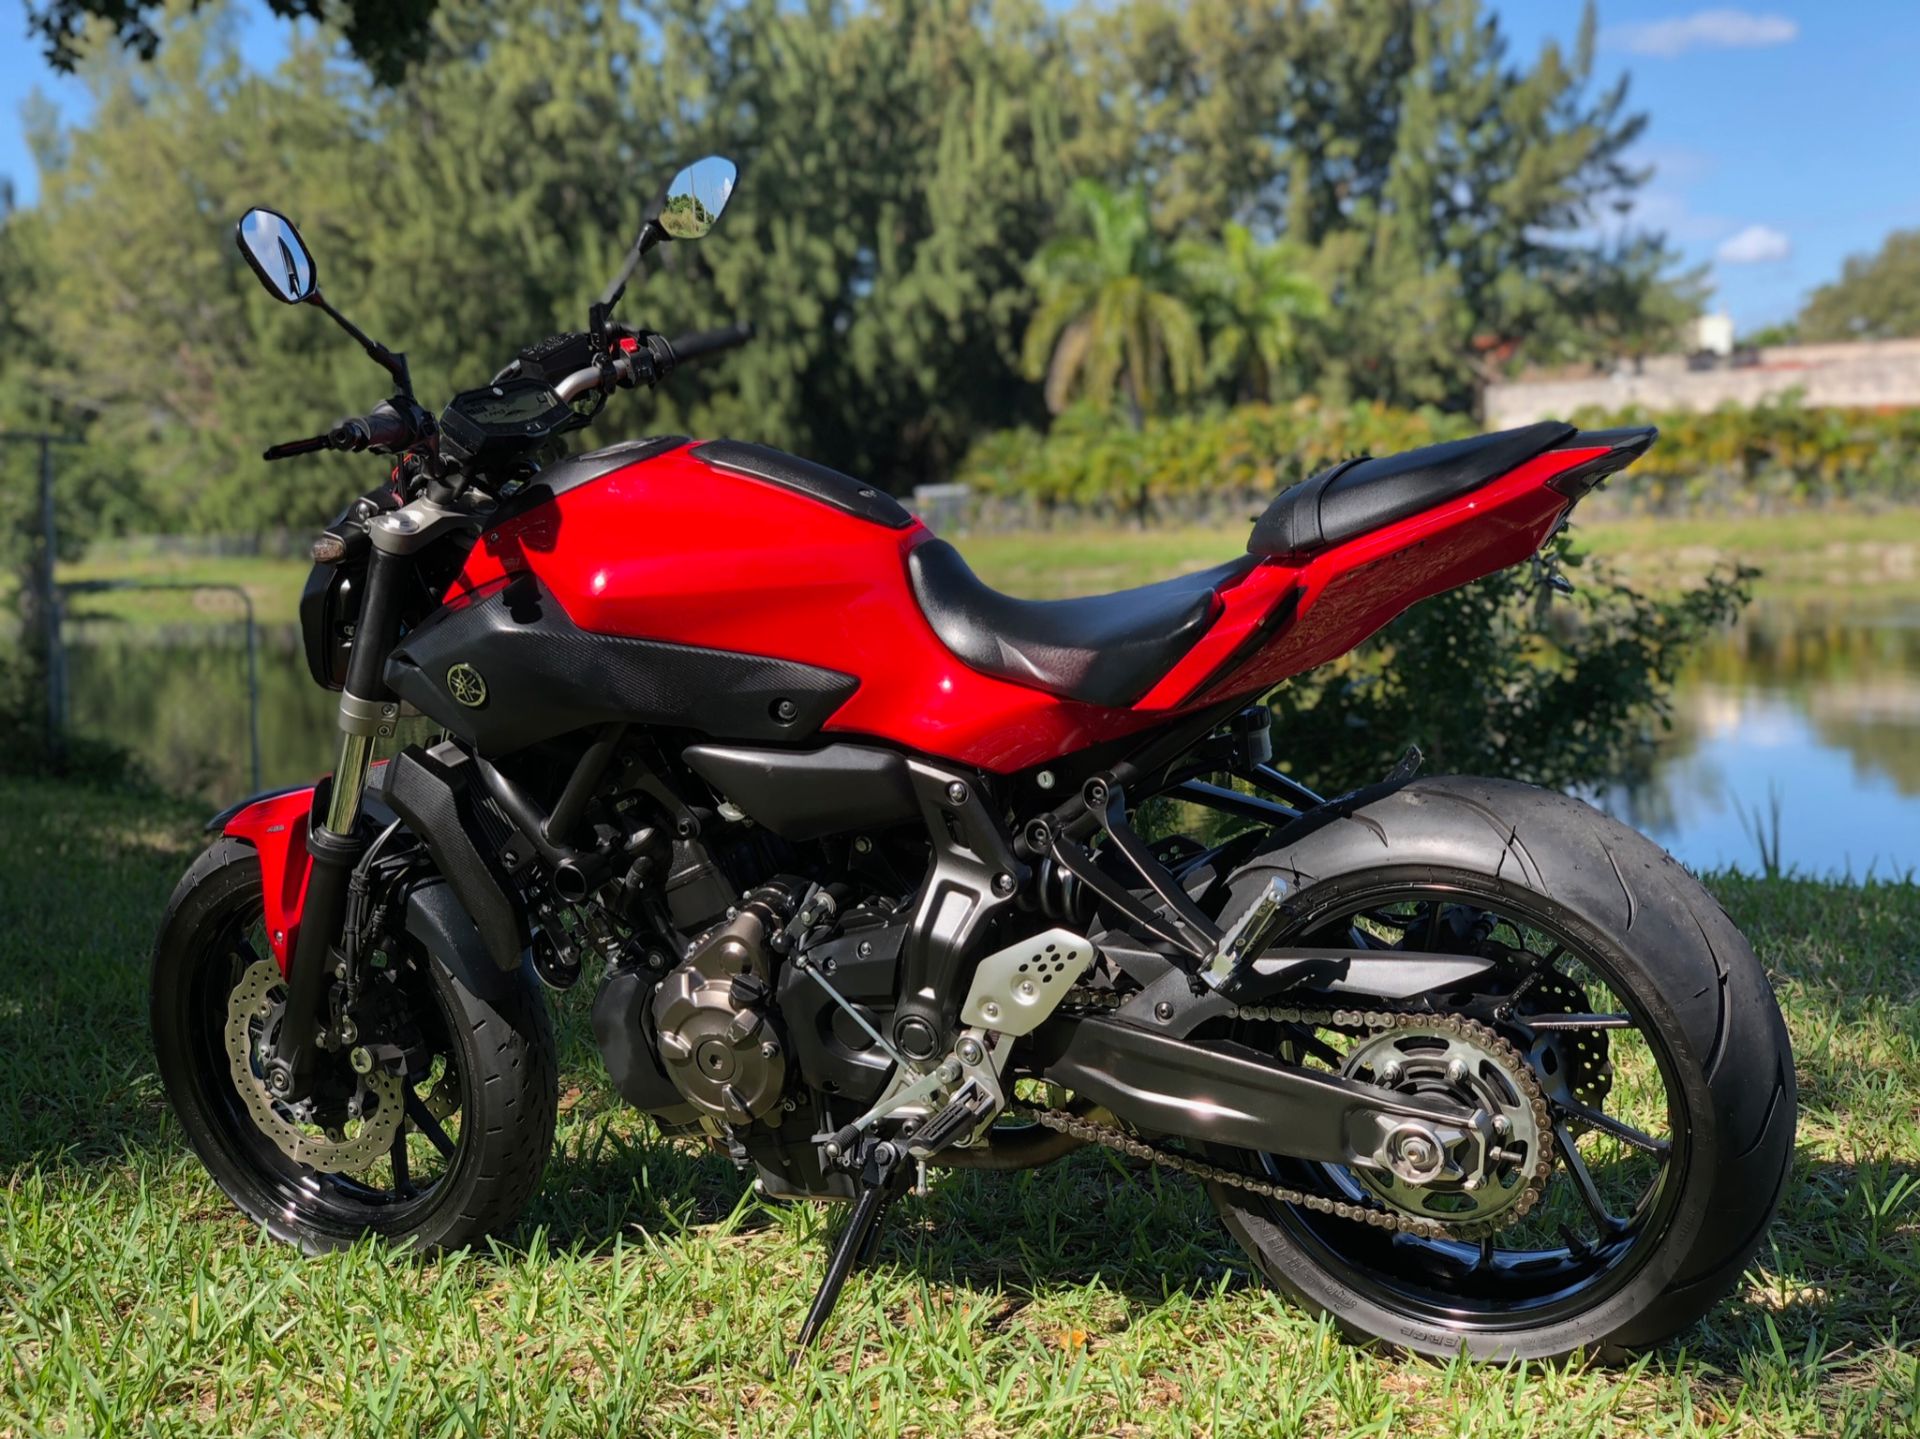 2017 Yamaha FZ-07 in North Miami Beach, Florida - Photo 20